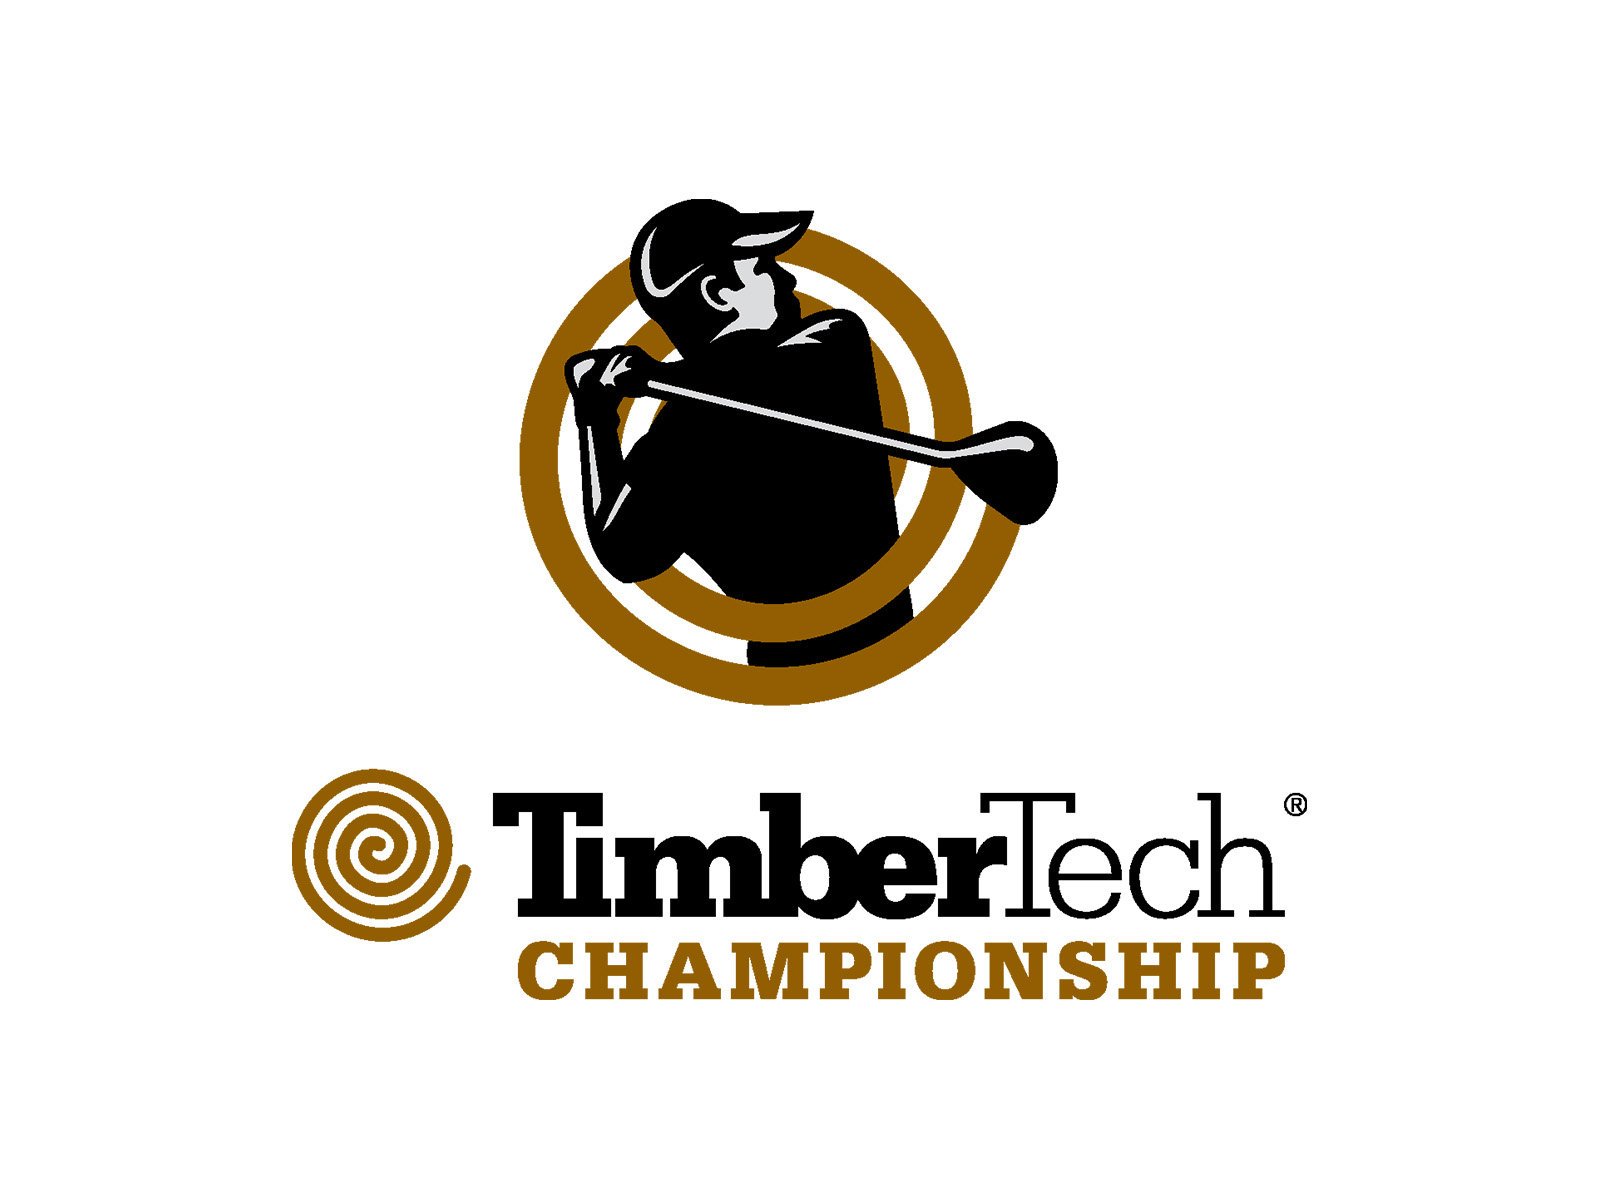 TimberTech Championship Logo by Adam Von Ohlen for twoxfour on Dribbble